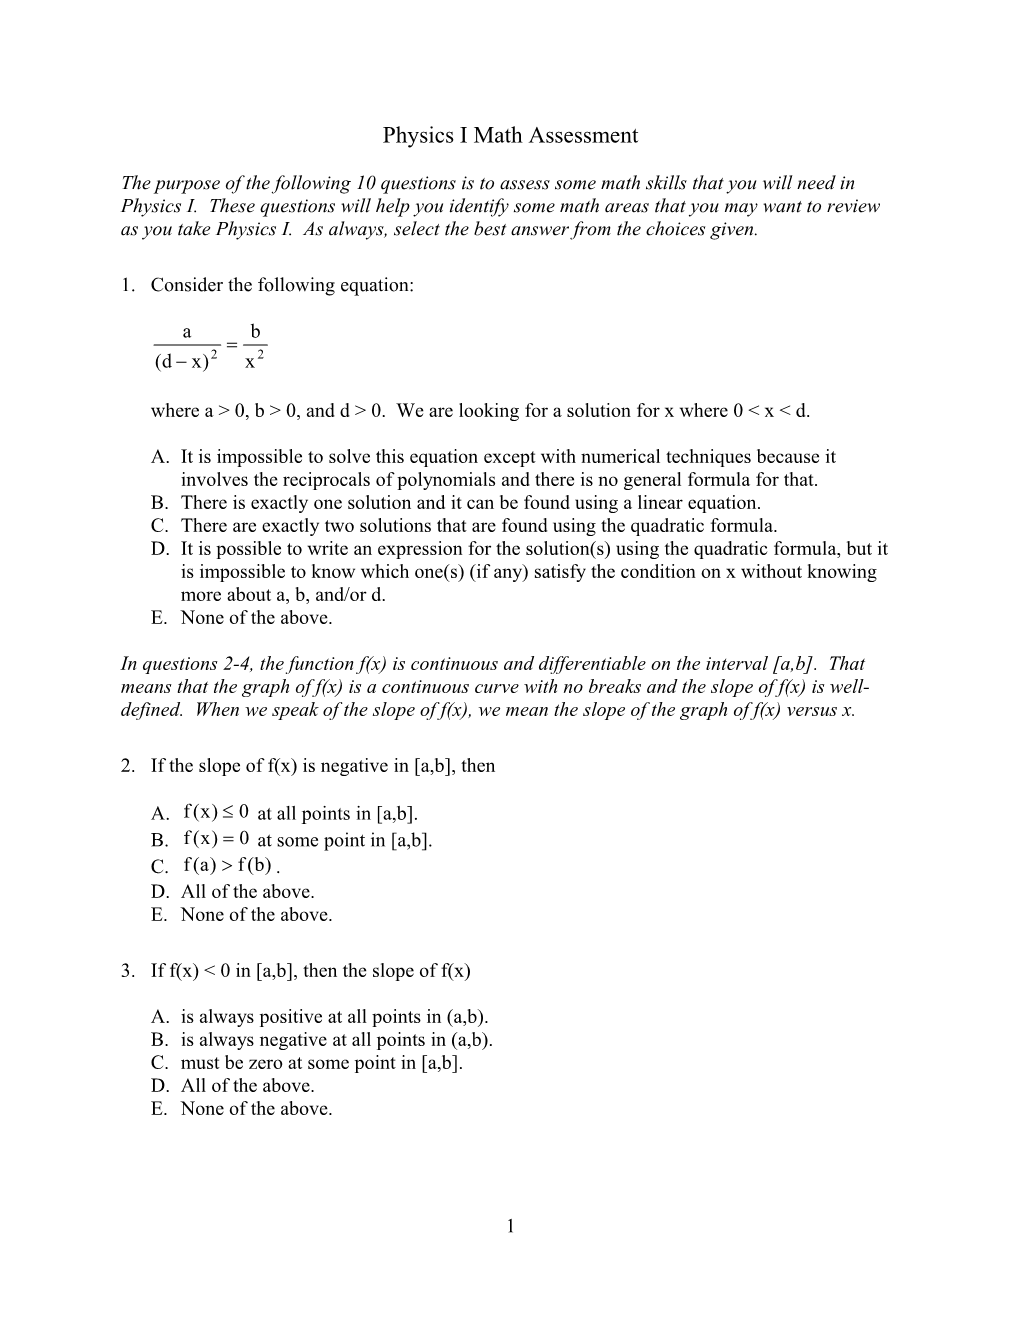 Physics I Math Assessment s1